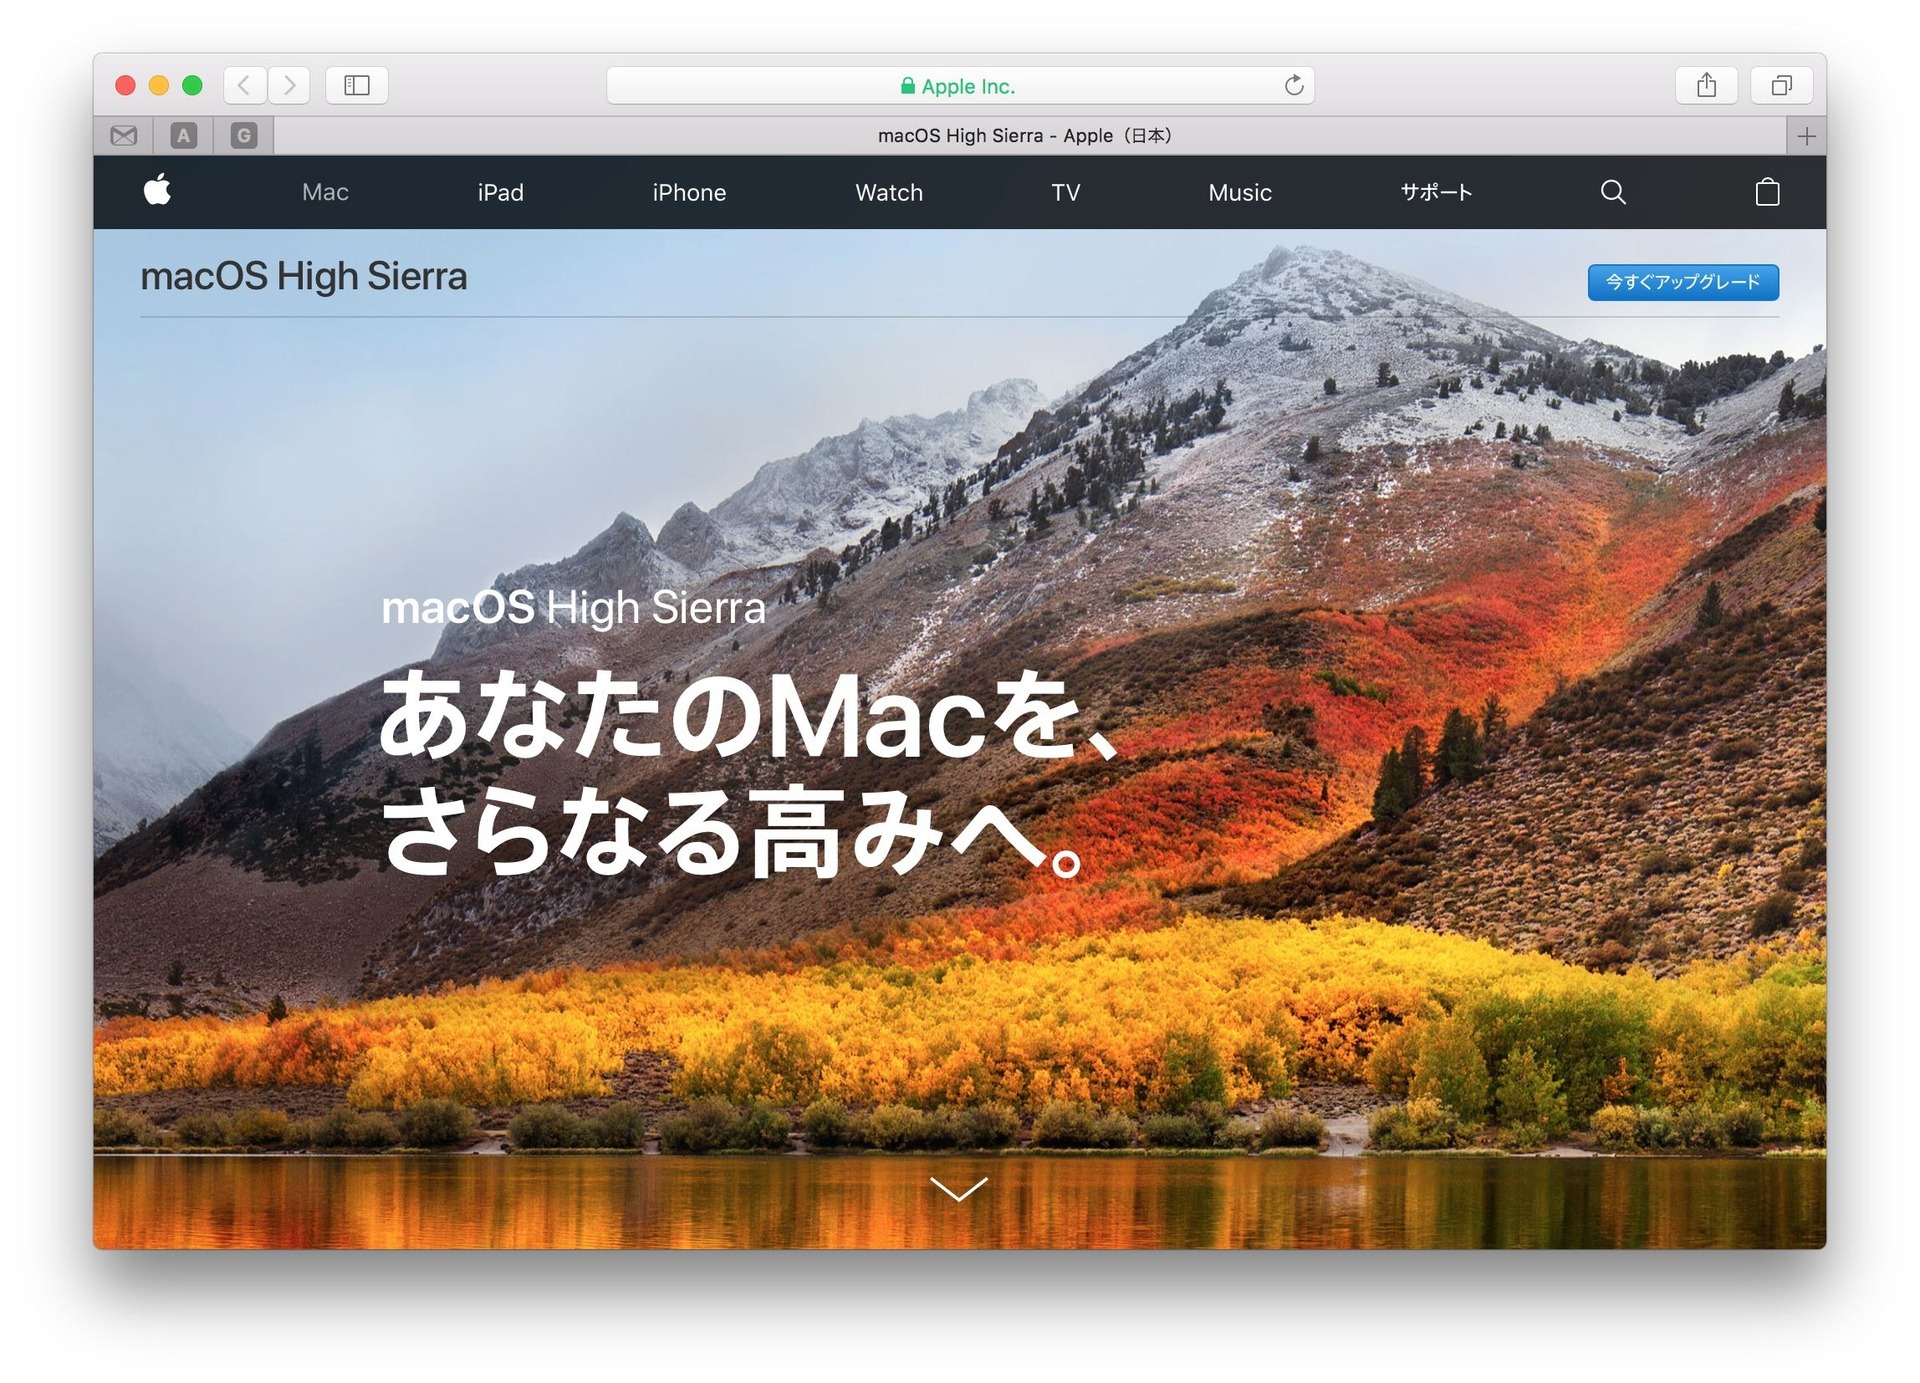 macOS High Sierra OSX 10.13 image